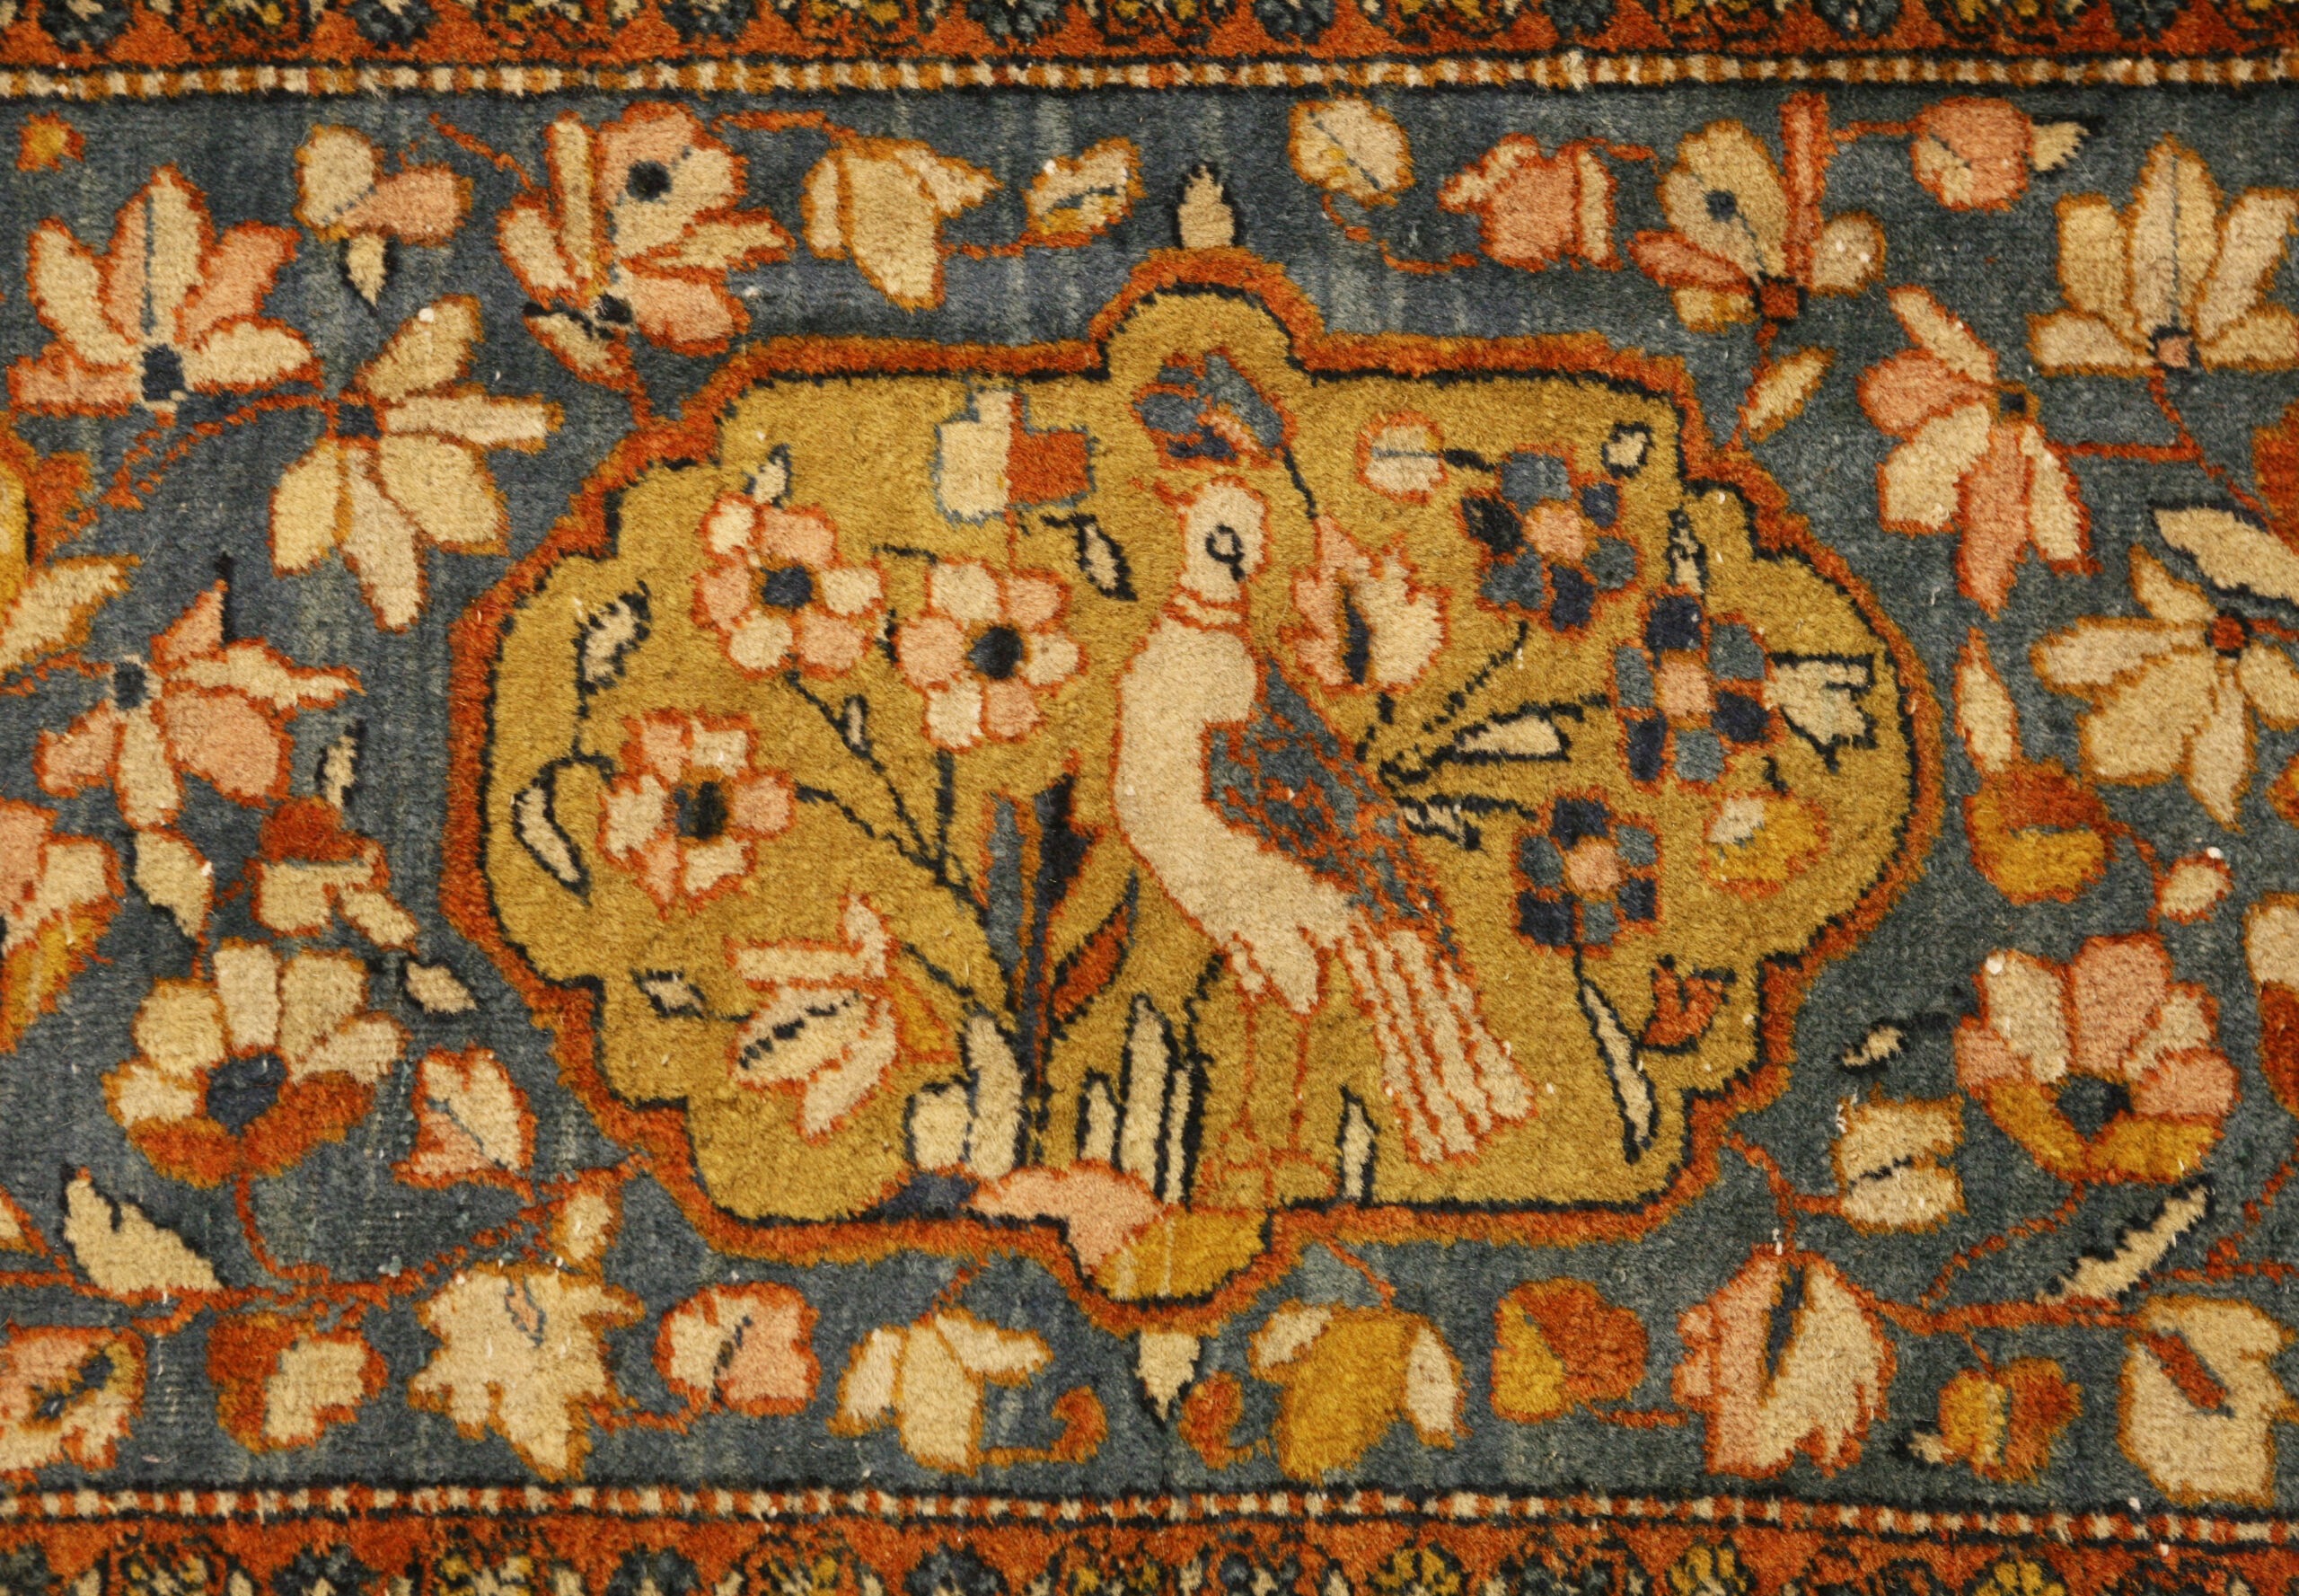 Antique Persian Kashan Dabir All-Over Carpet n°:77879683